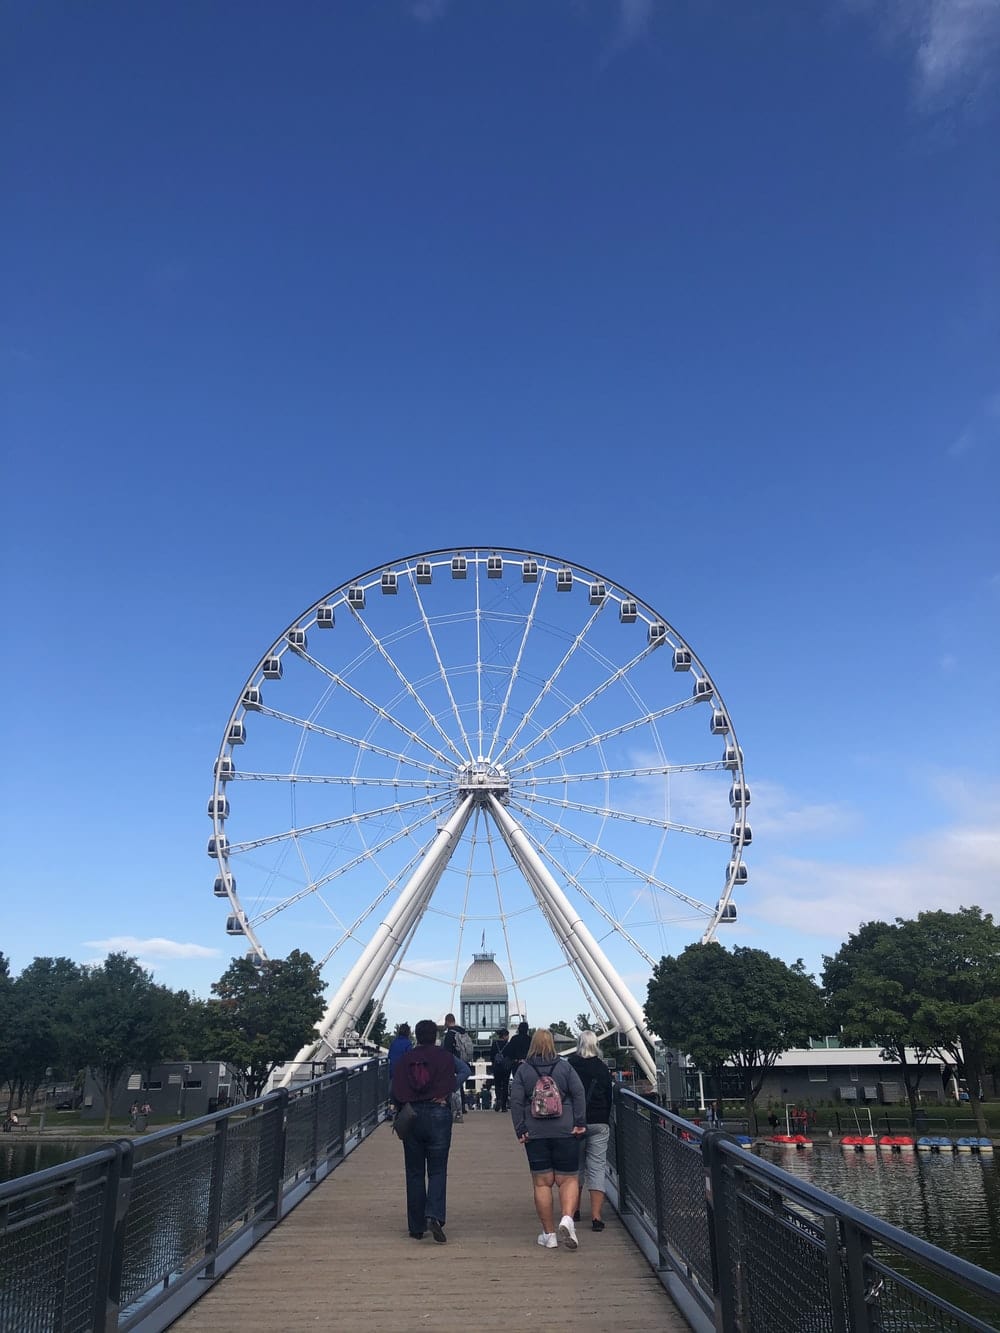 Cross Stitch | Montréal - People Walking On Street Near Ferris Wheel Under Blue Sky During Daytime - Cross Stitched